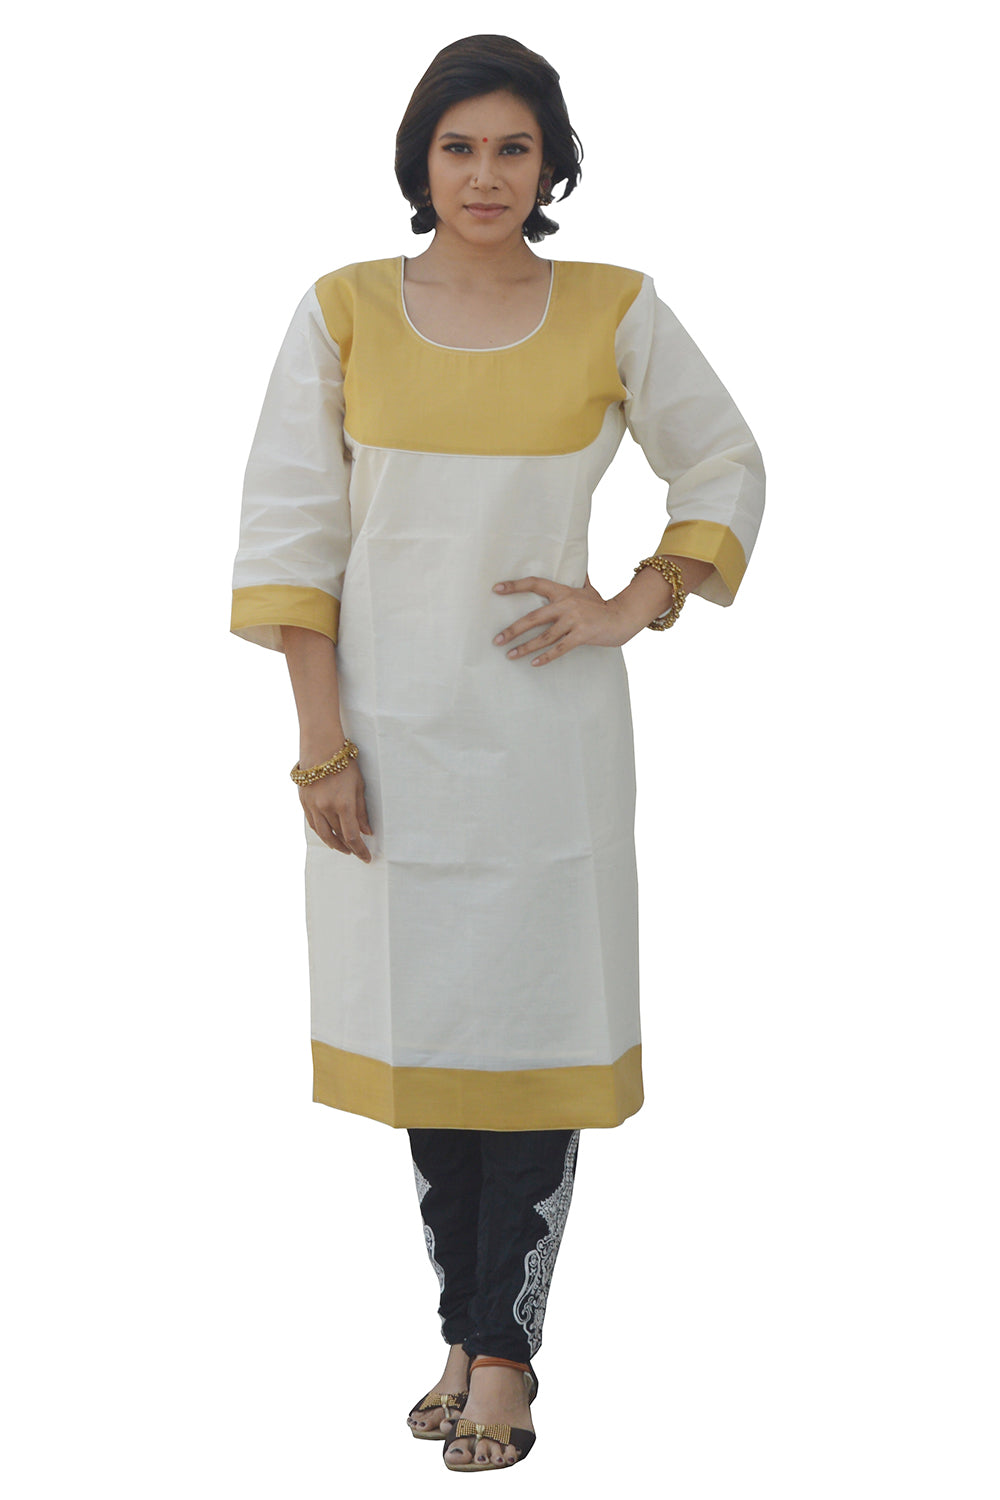 Southloom Kerala Women's Salwar / Churidar Top with Yellow Design